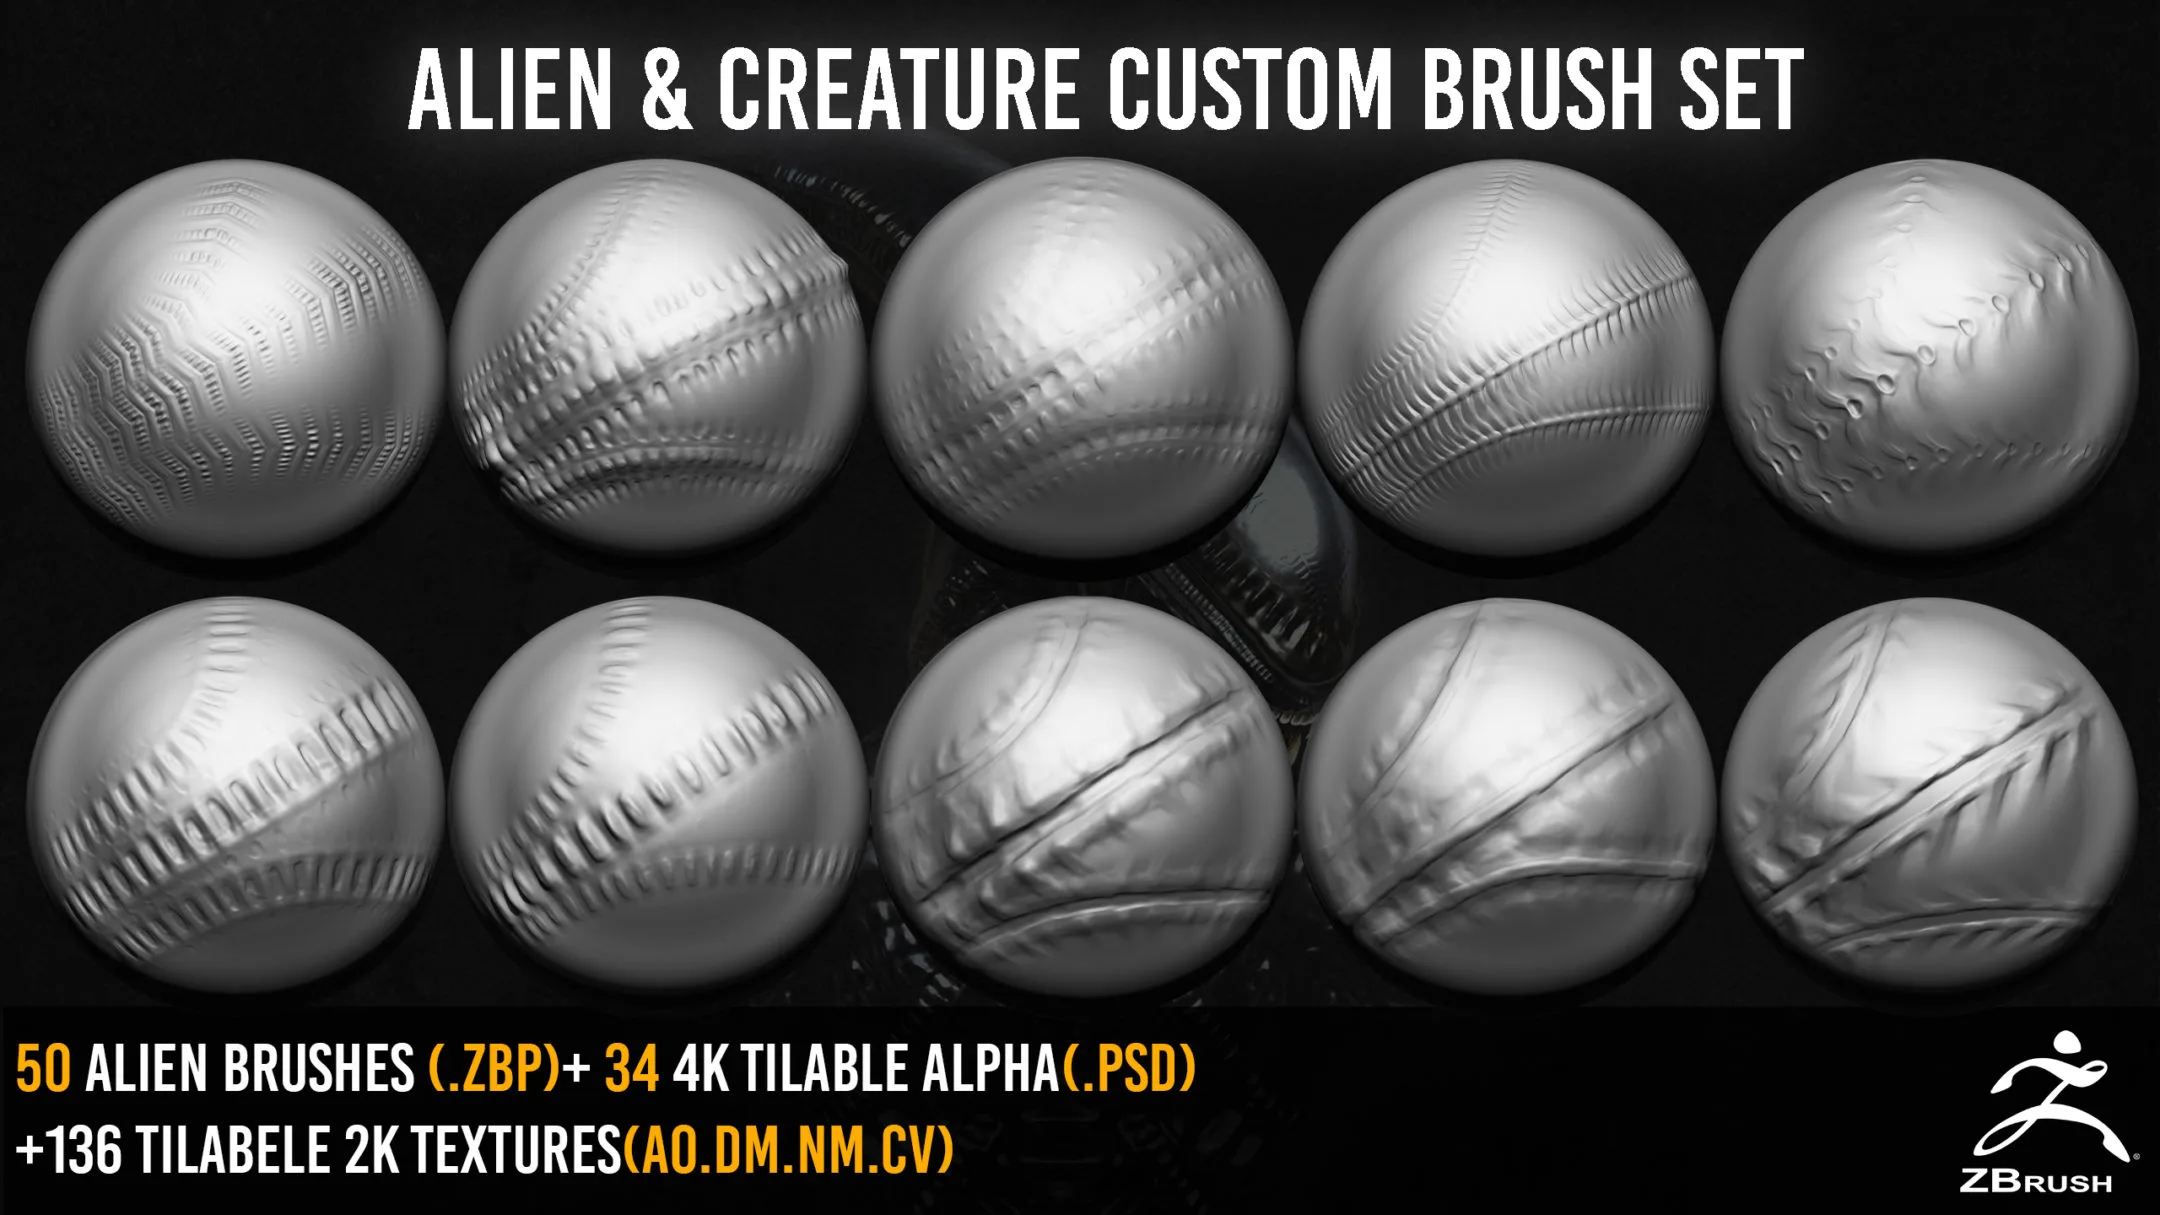 50 ZBrush Alien And Creature Custom Brush Set + 136 Textures 2K + 4K Alpha - VOL 2